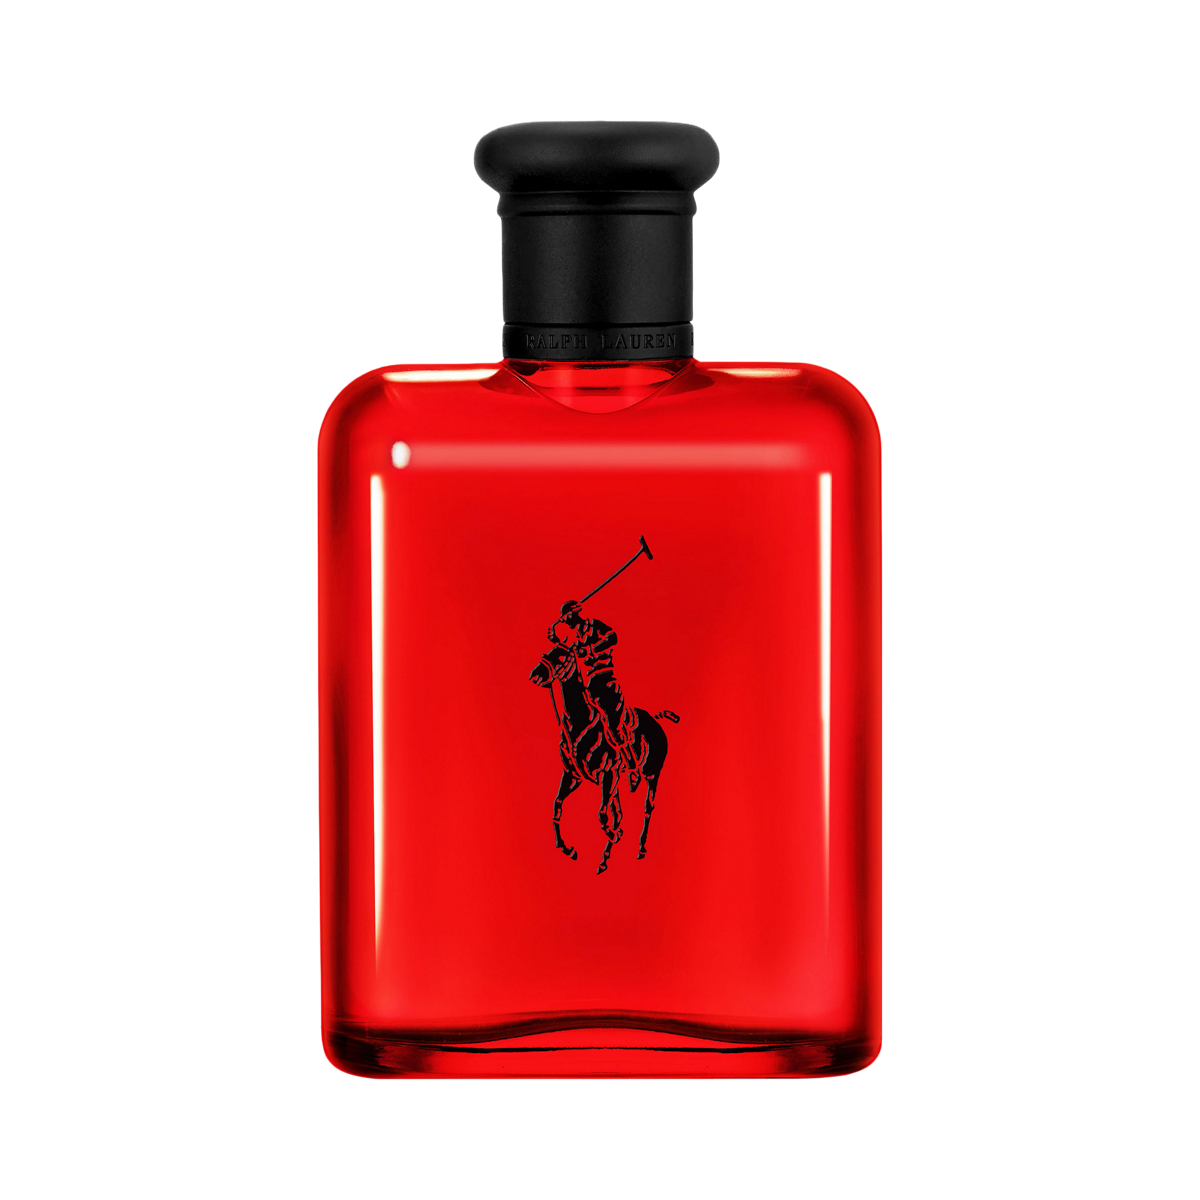 Polo Red Parfum Ralph Lauren - I Fragrance OfficialNew Fragrance